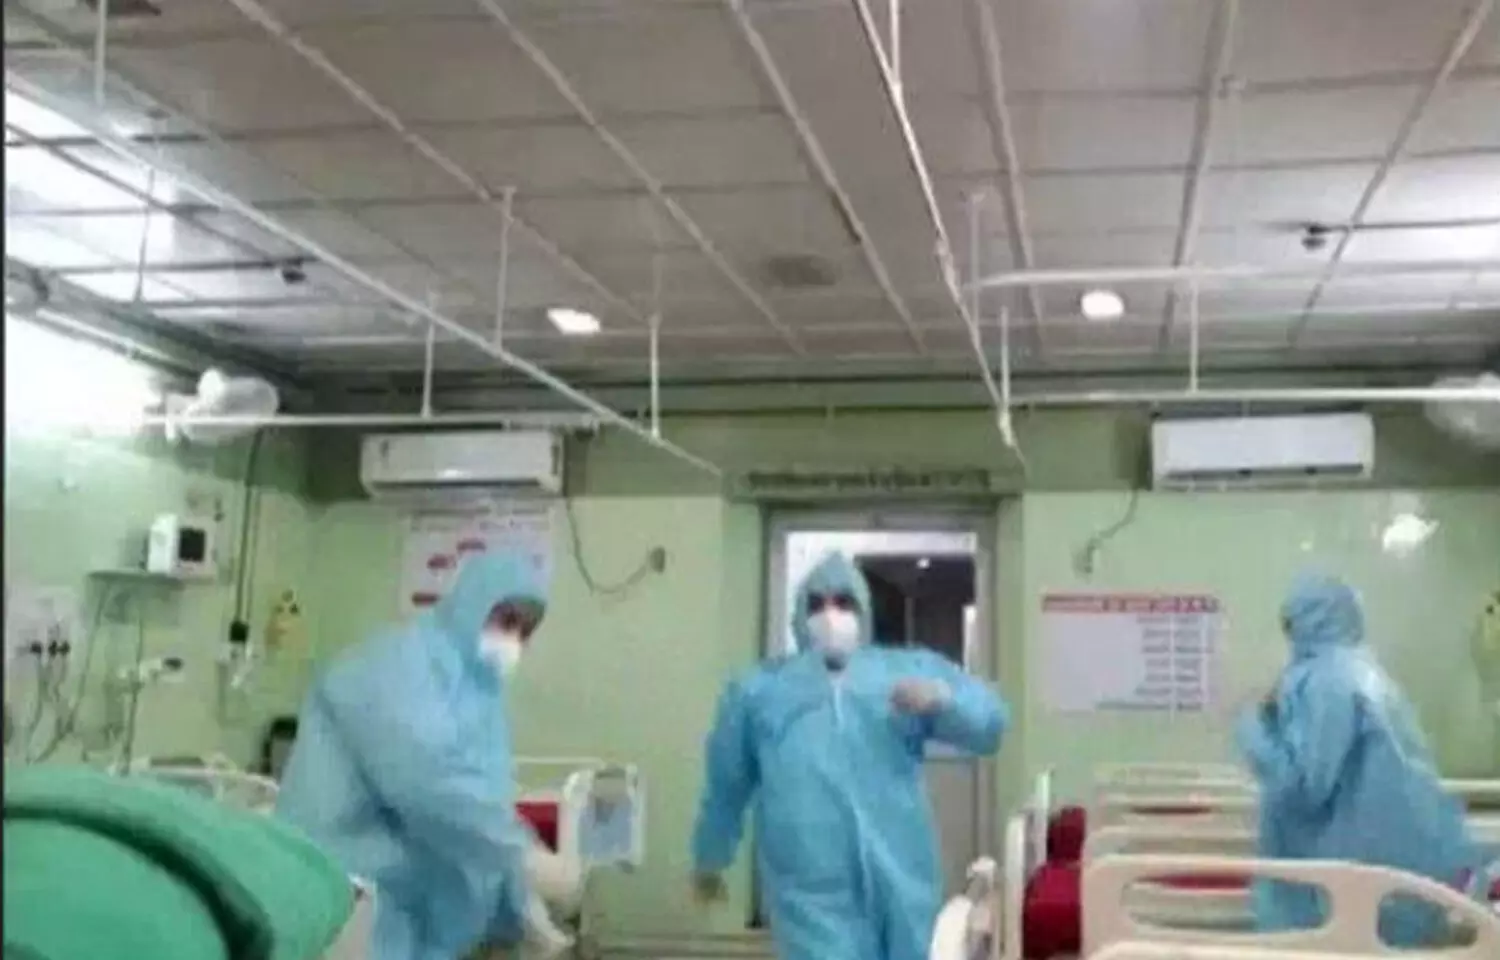 Action against Govt Hospital nursing staff, other after dance video during duty hours goes viral